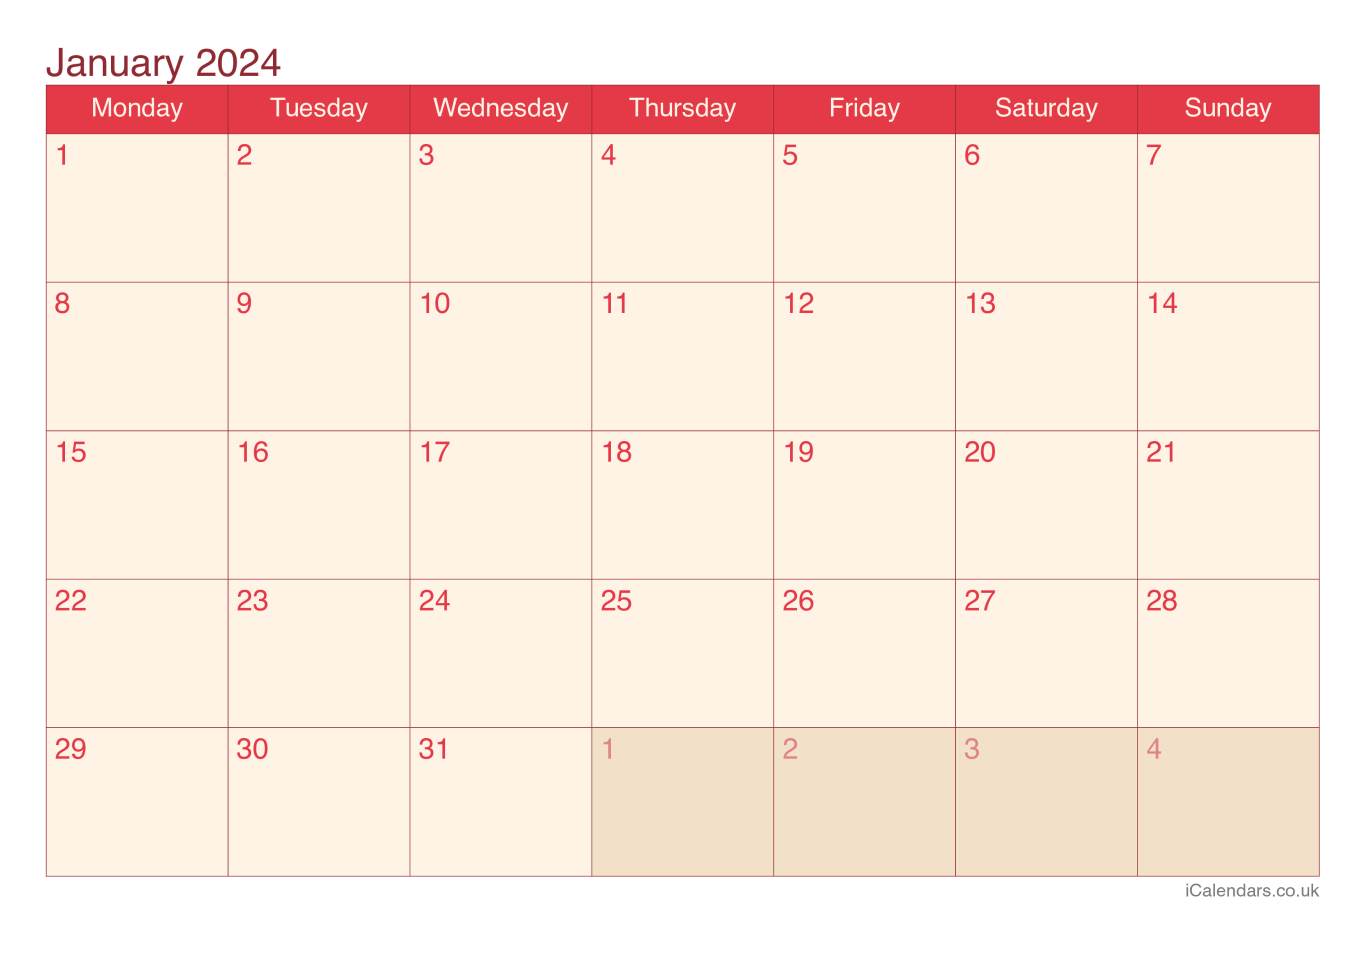 Calendar January 2024 - Cherry